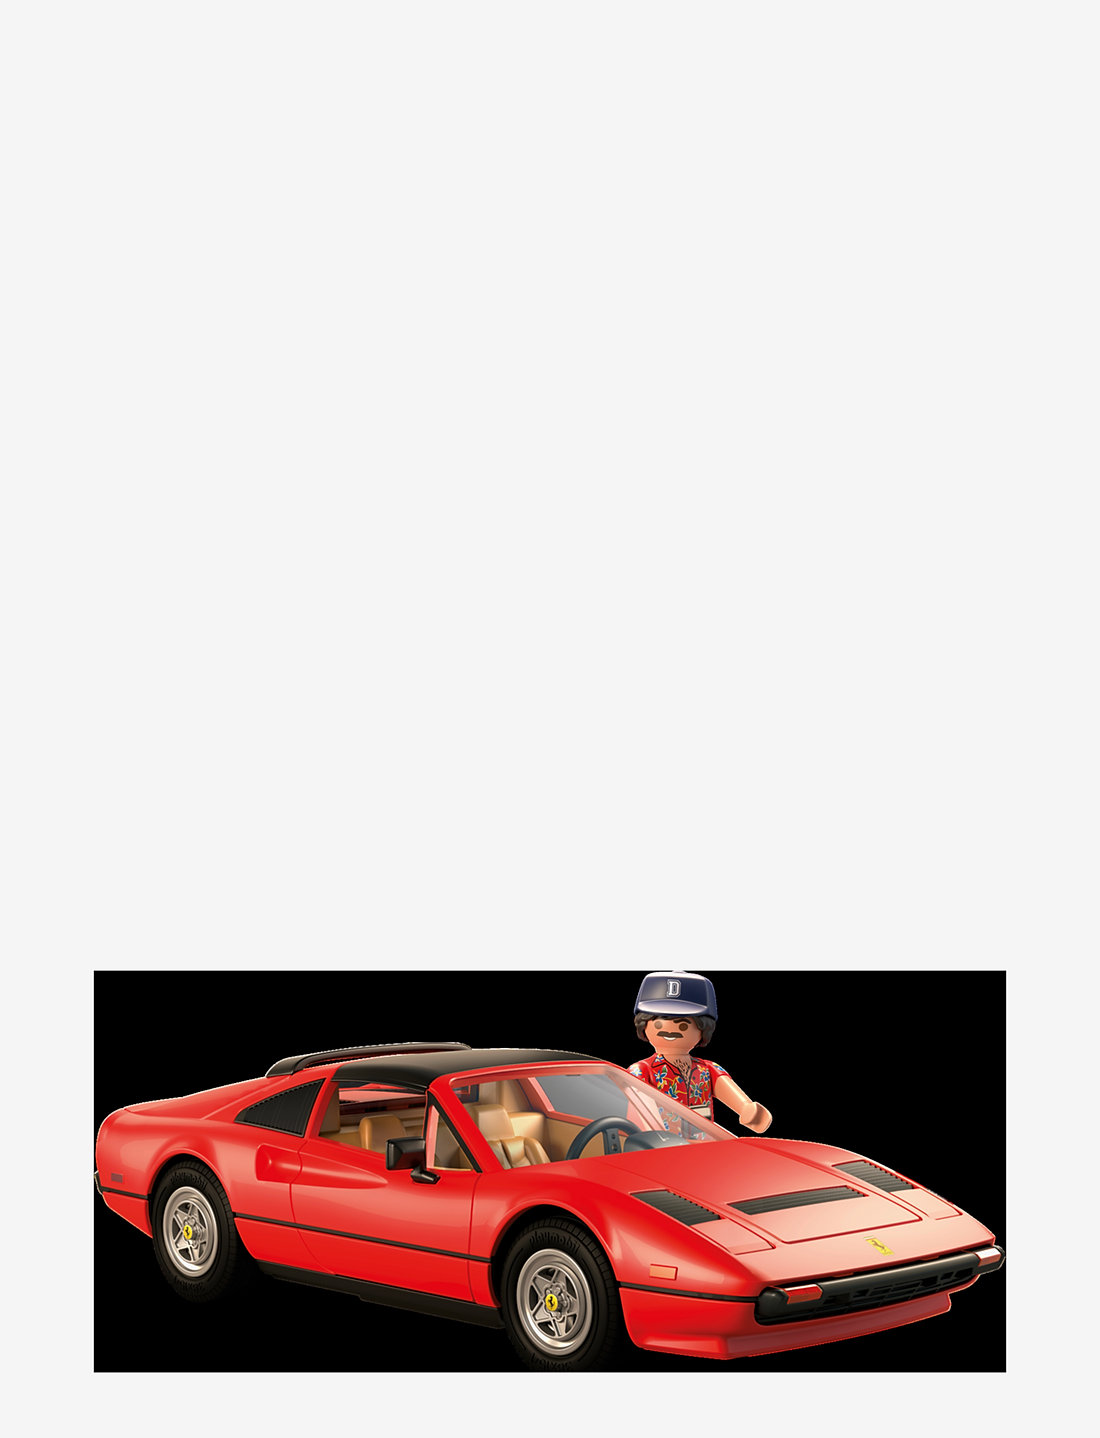 PLAYMOBIL Playmobil Movie Cars Magnum, P.i. Ferrari 308 Gts